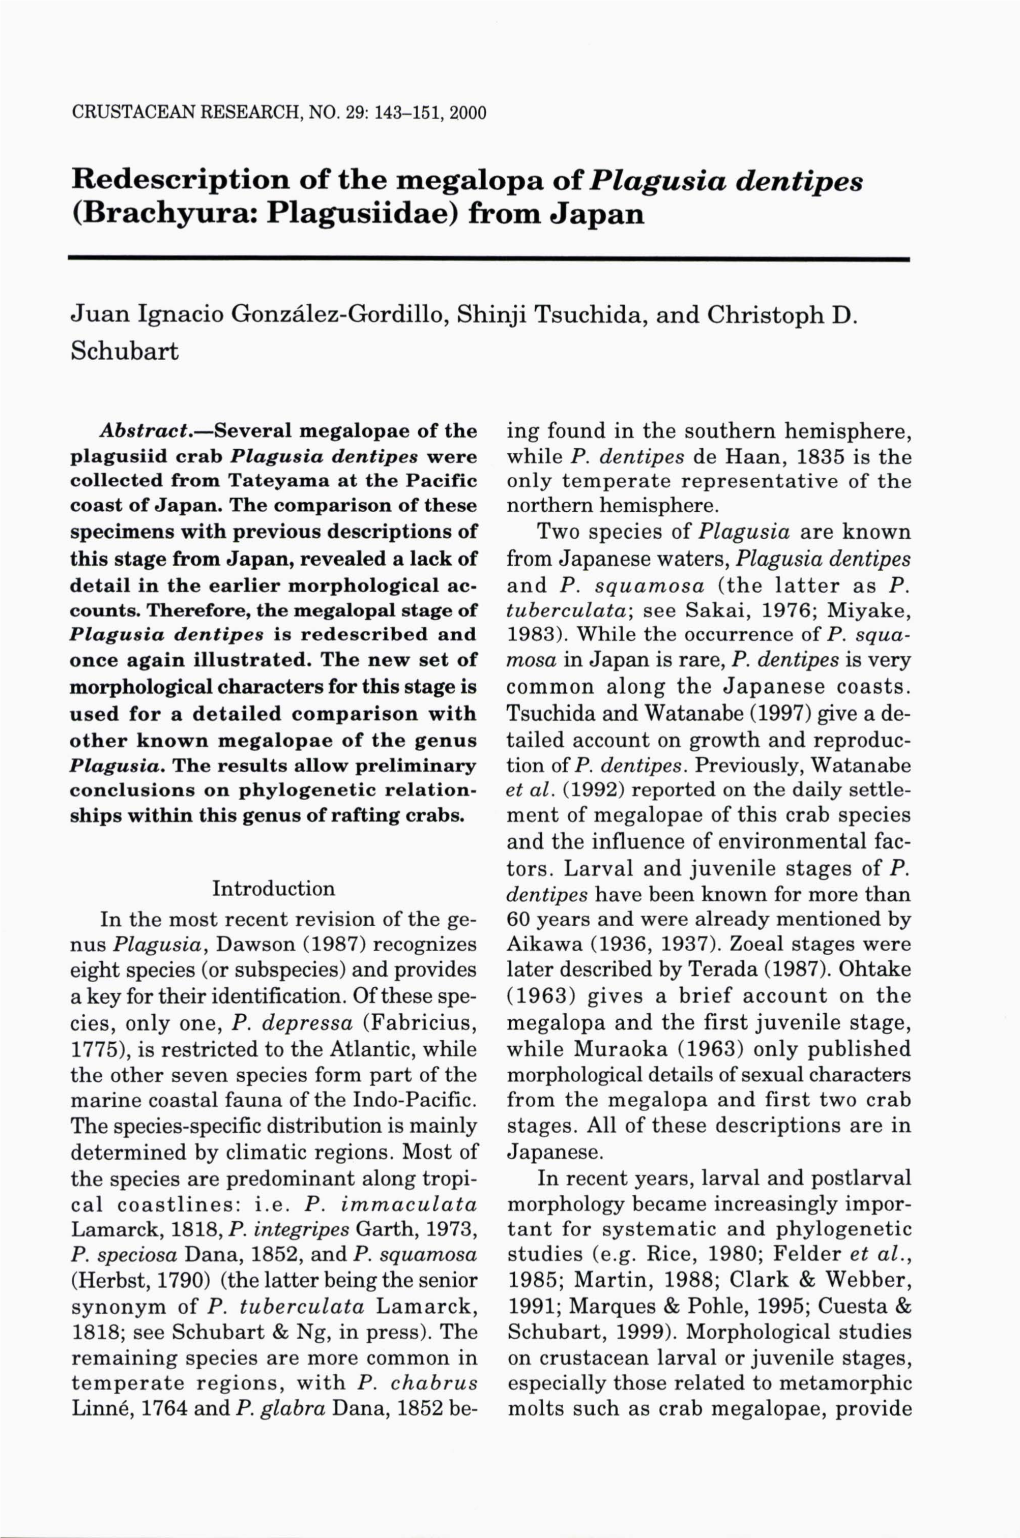 Redescription of the Megalopa of Plagusia Dentipes (Brachyura: Plagusiidae) from Japan